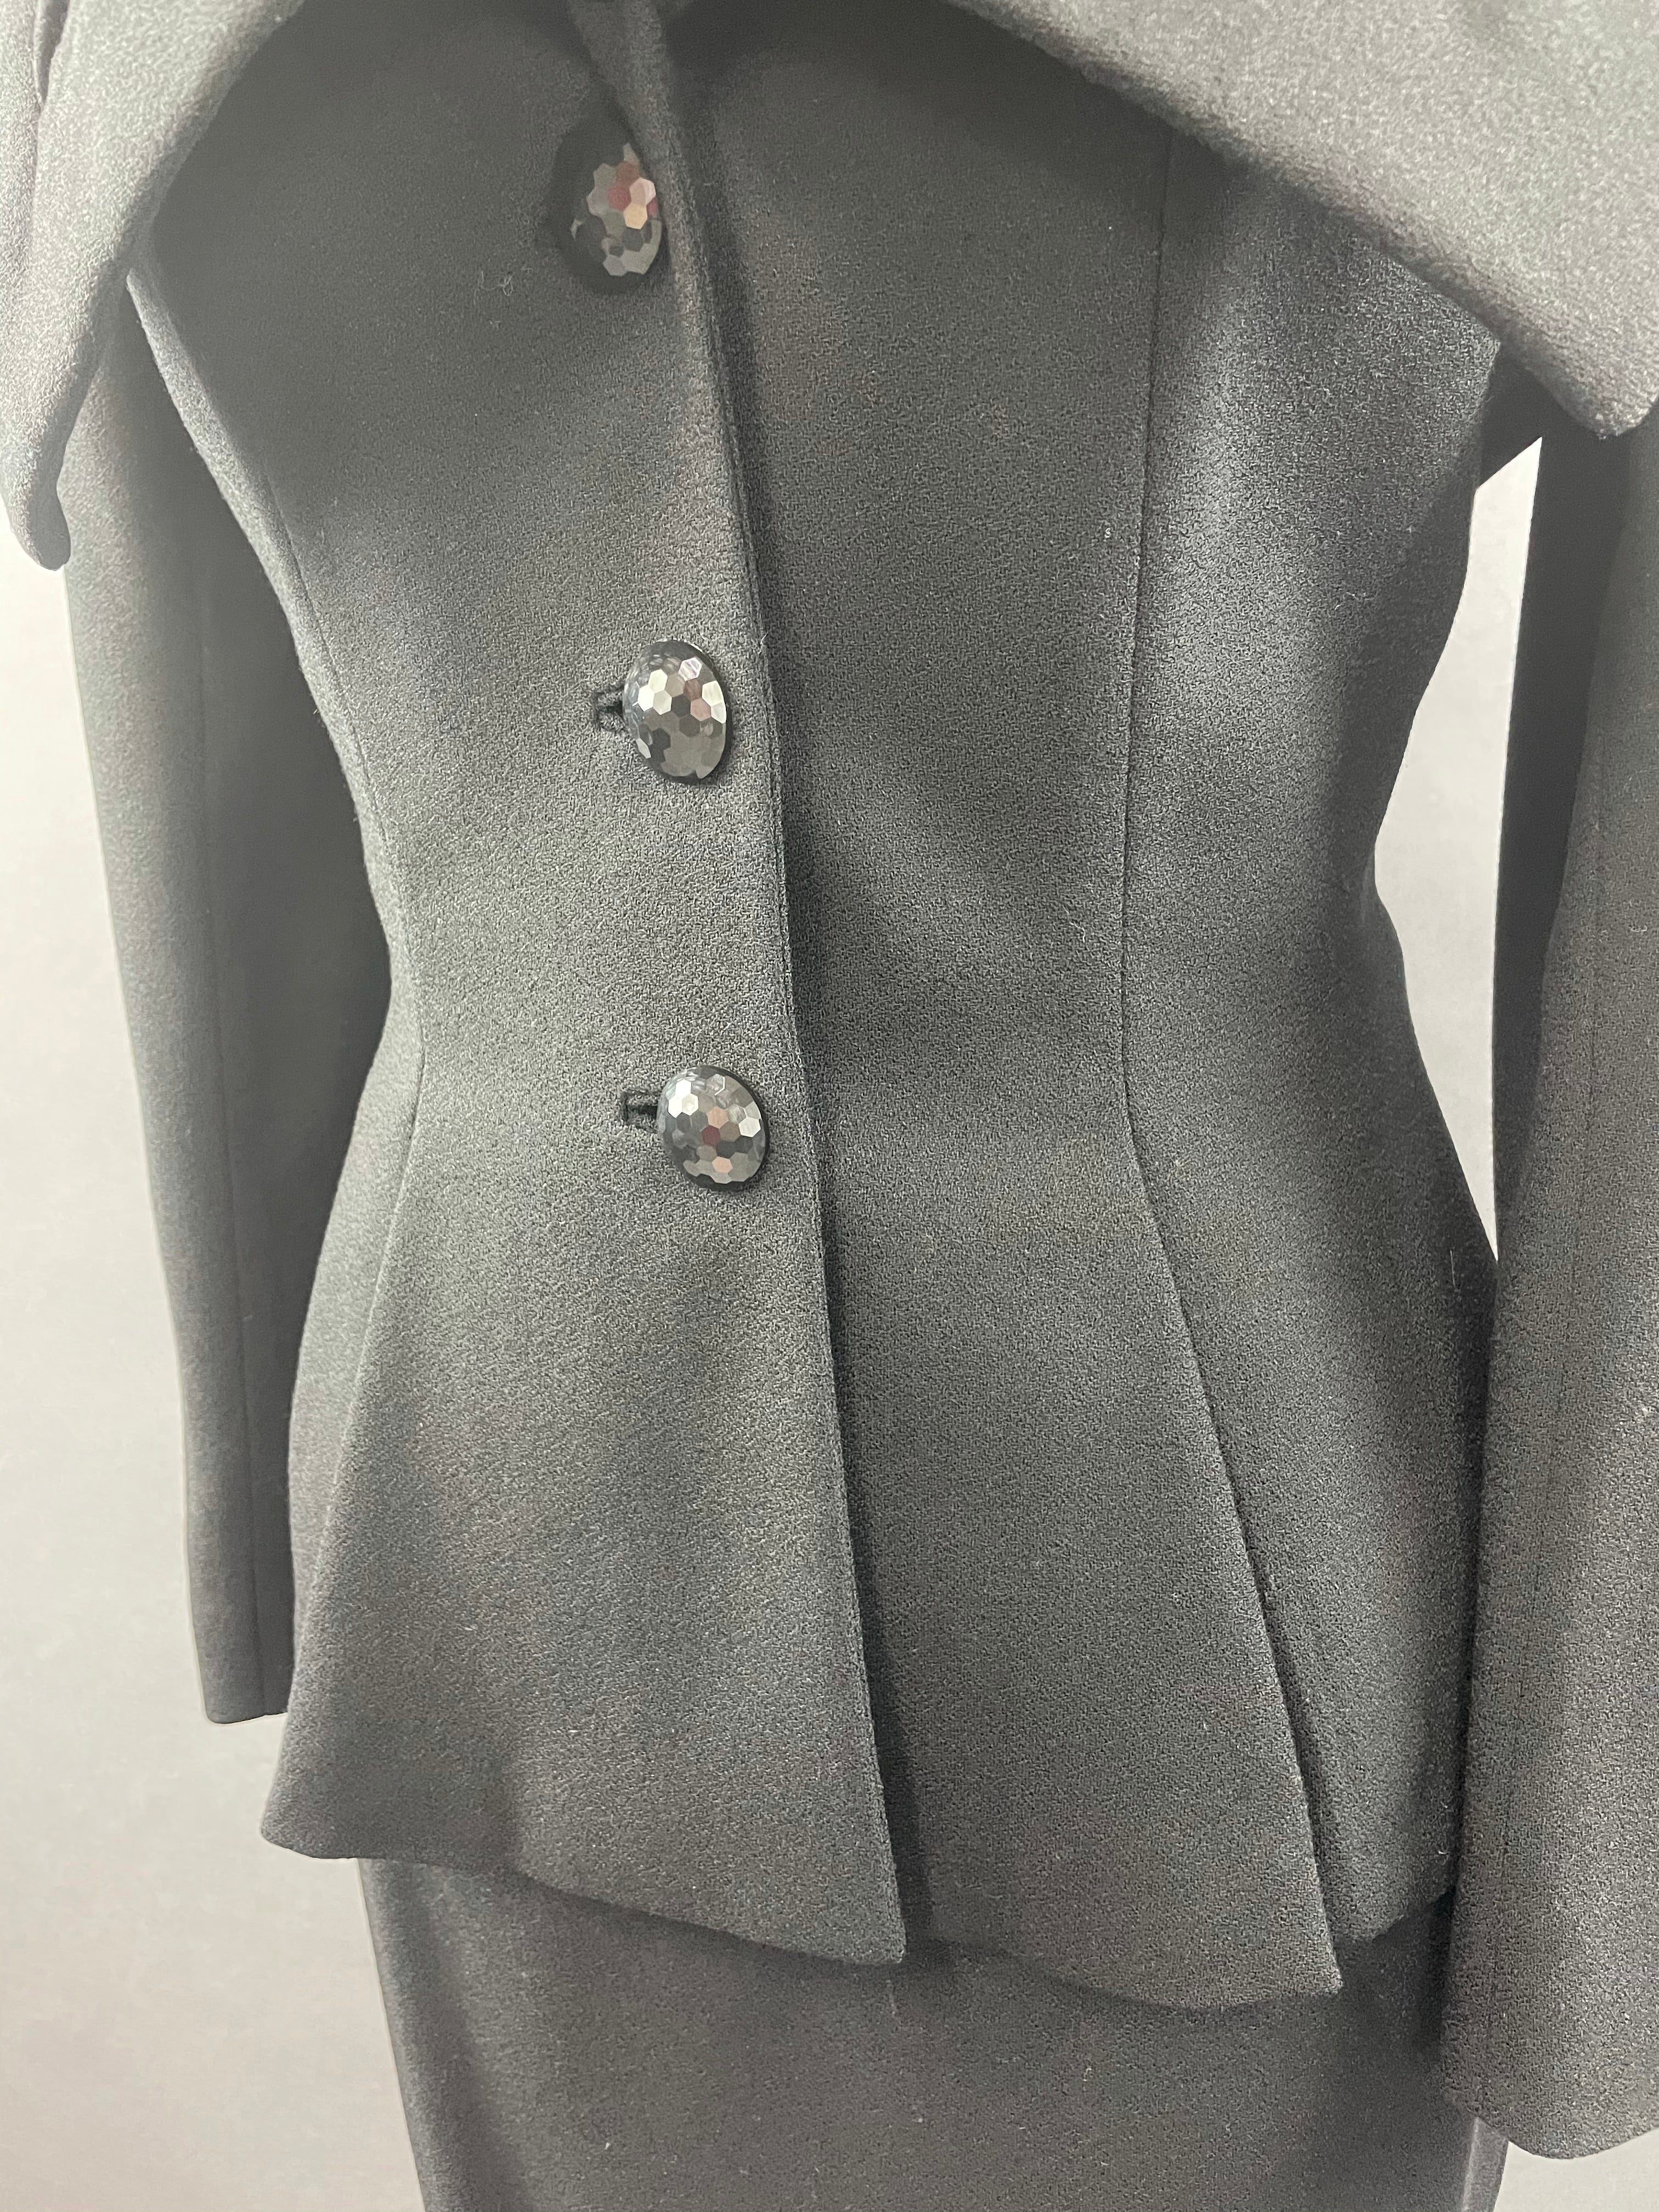 1950s Black Wool Lilli Ann Skirt Suit Size M